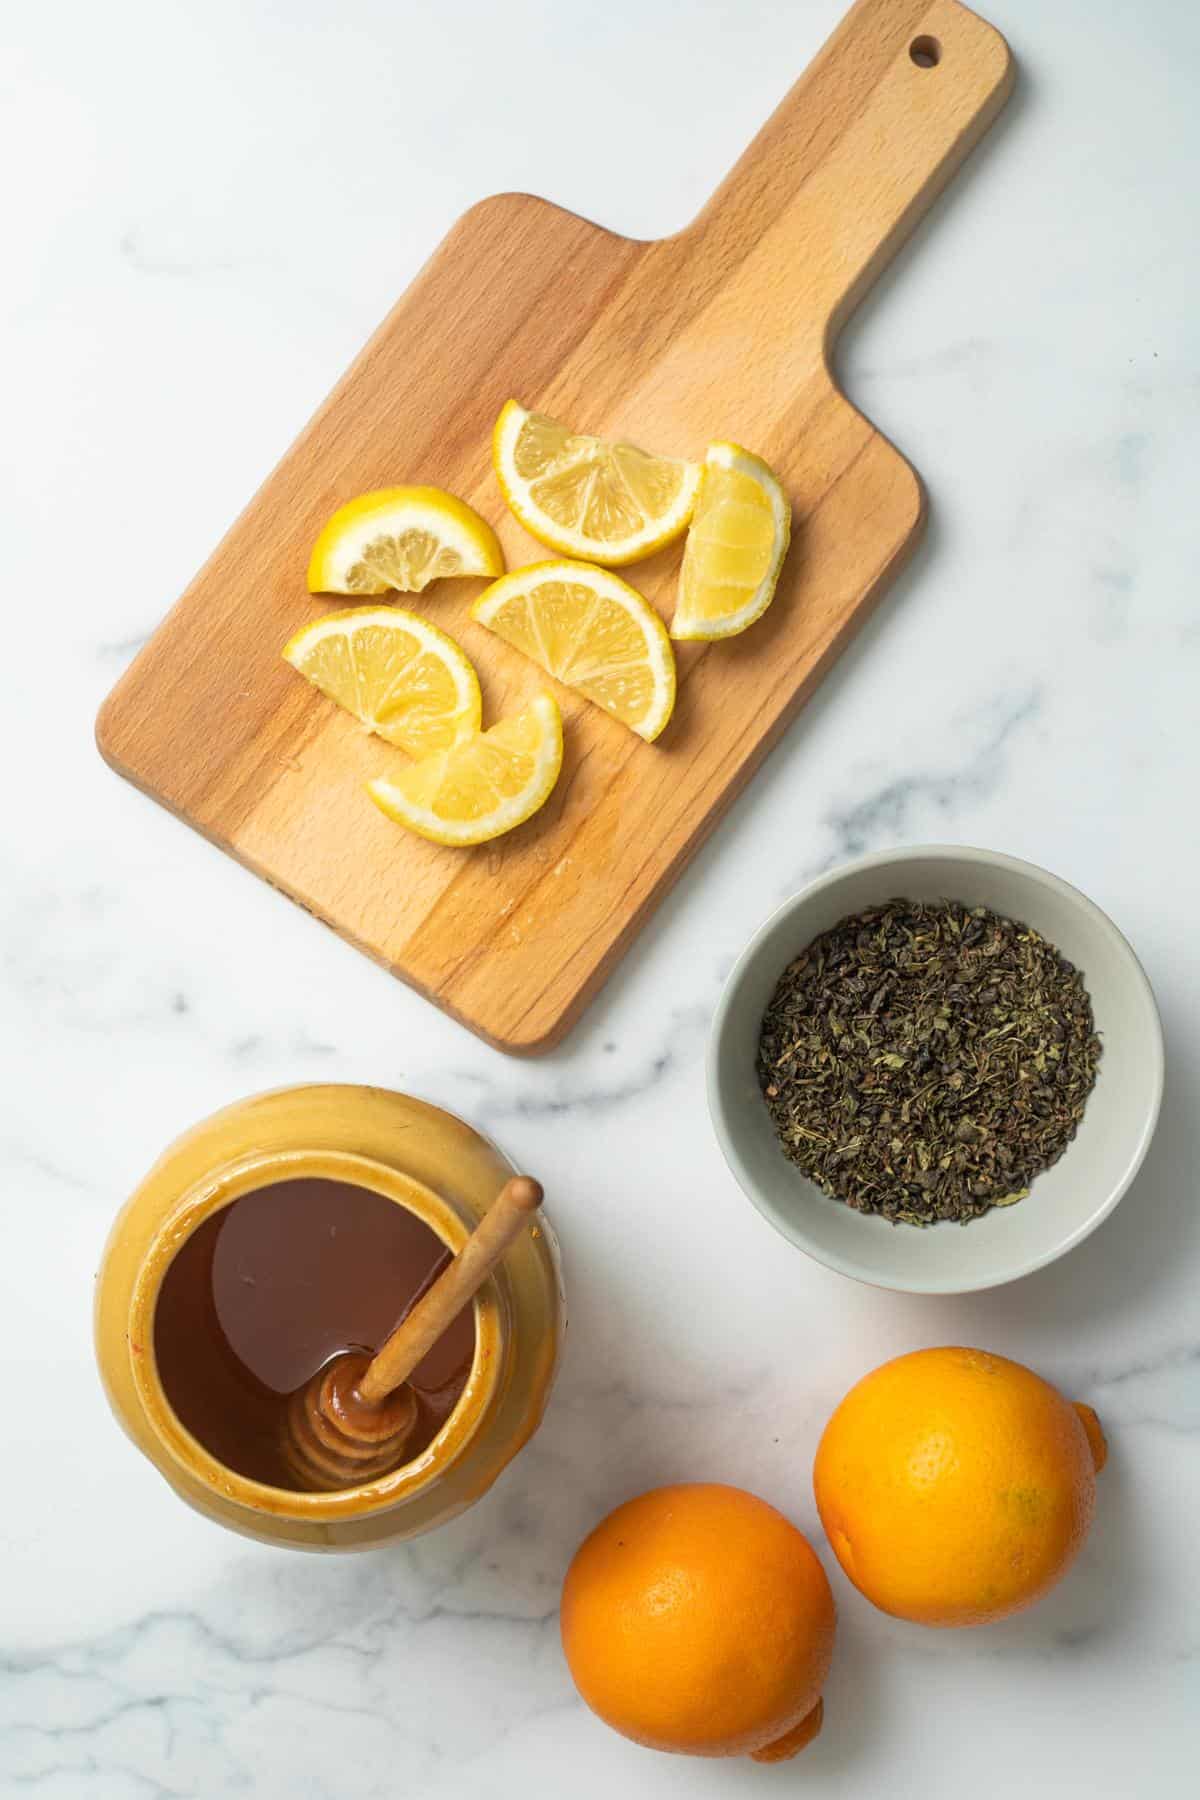 oranges, mint tea, lemon slices and honey for the tea